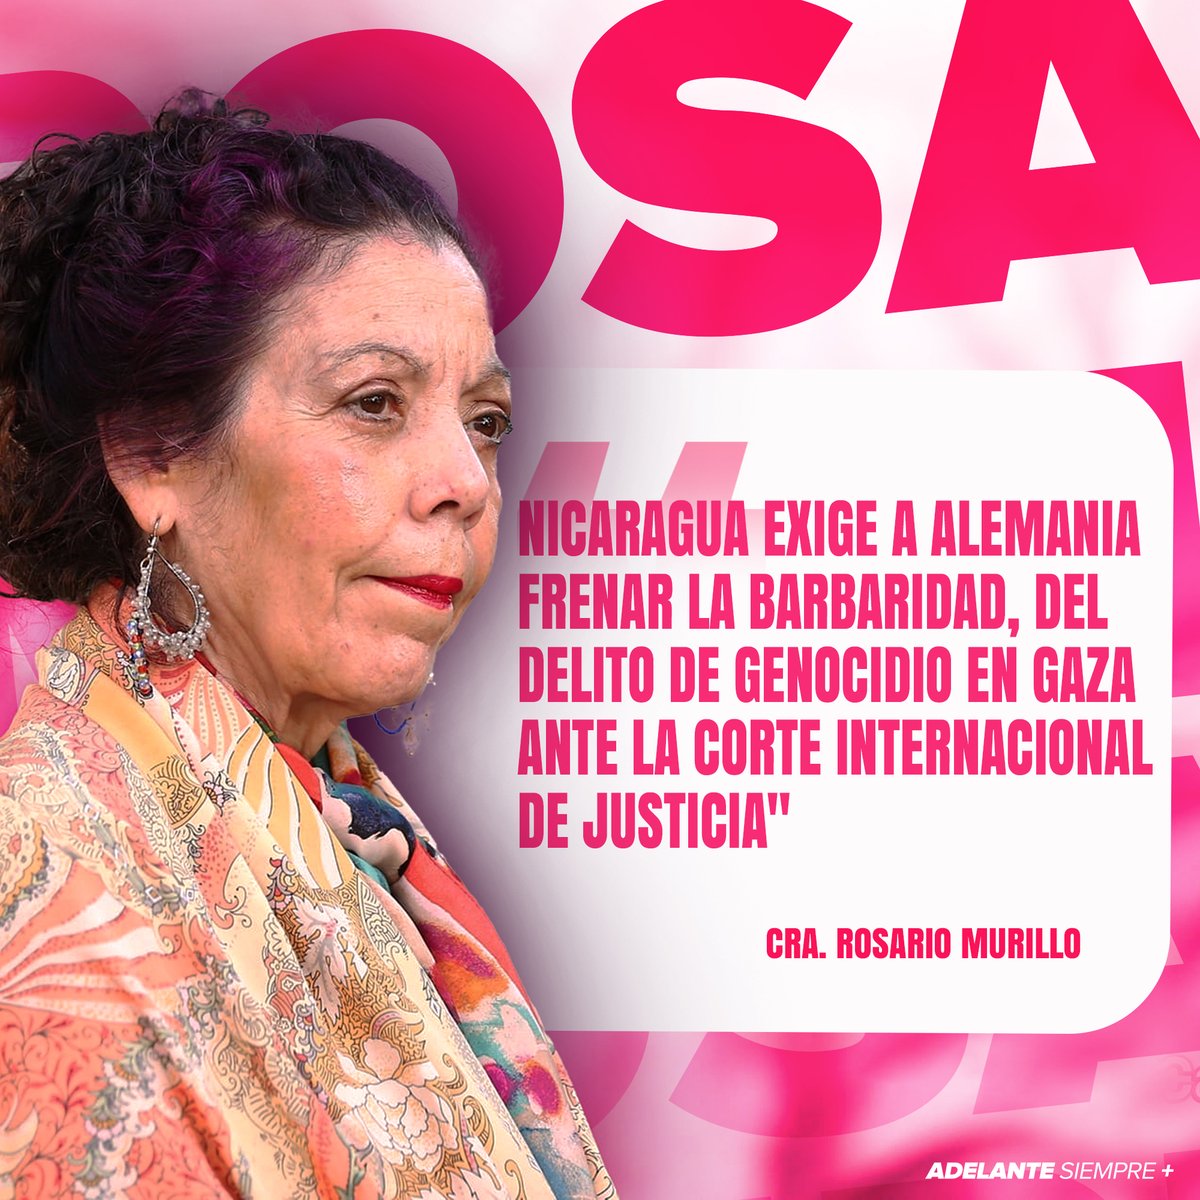 Compañera Vicepresidenta Rosario Murillo hoy 8 de #abril2024 📷📷
#AdelanteSiempre
#4519LapatriaLaRevolución